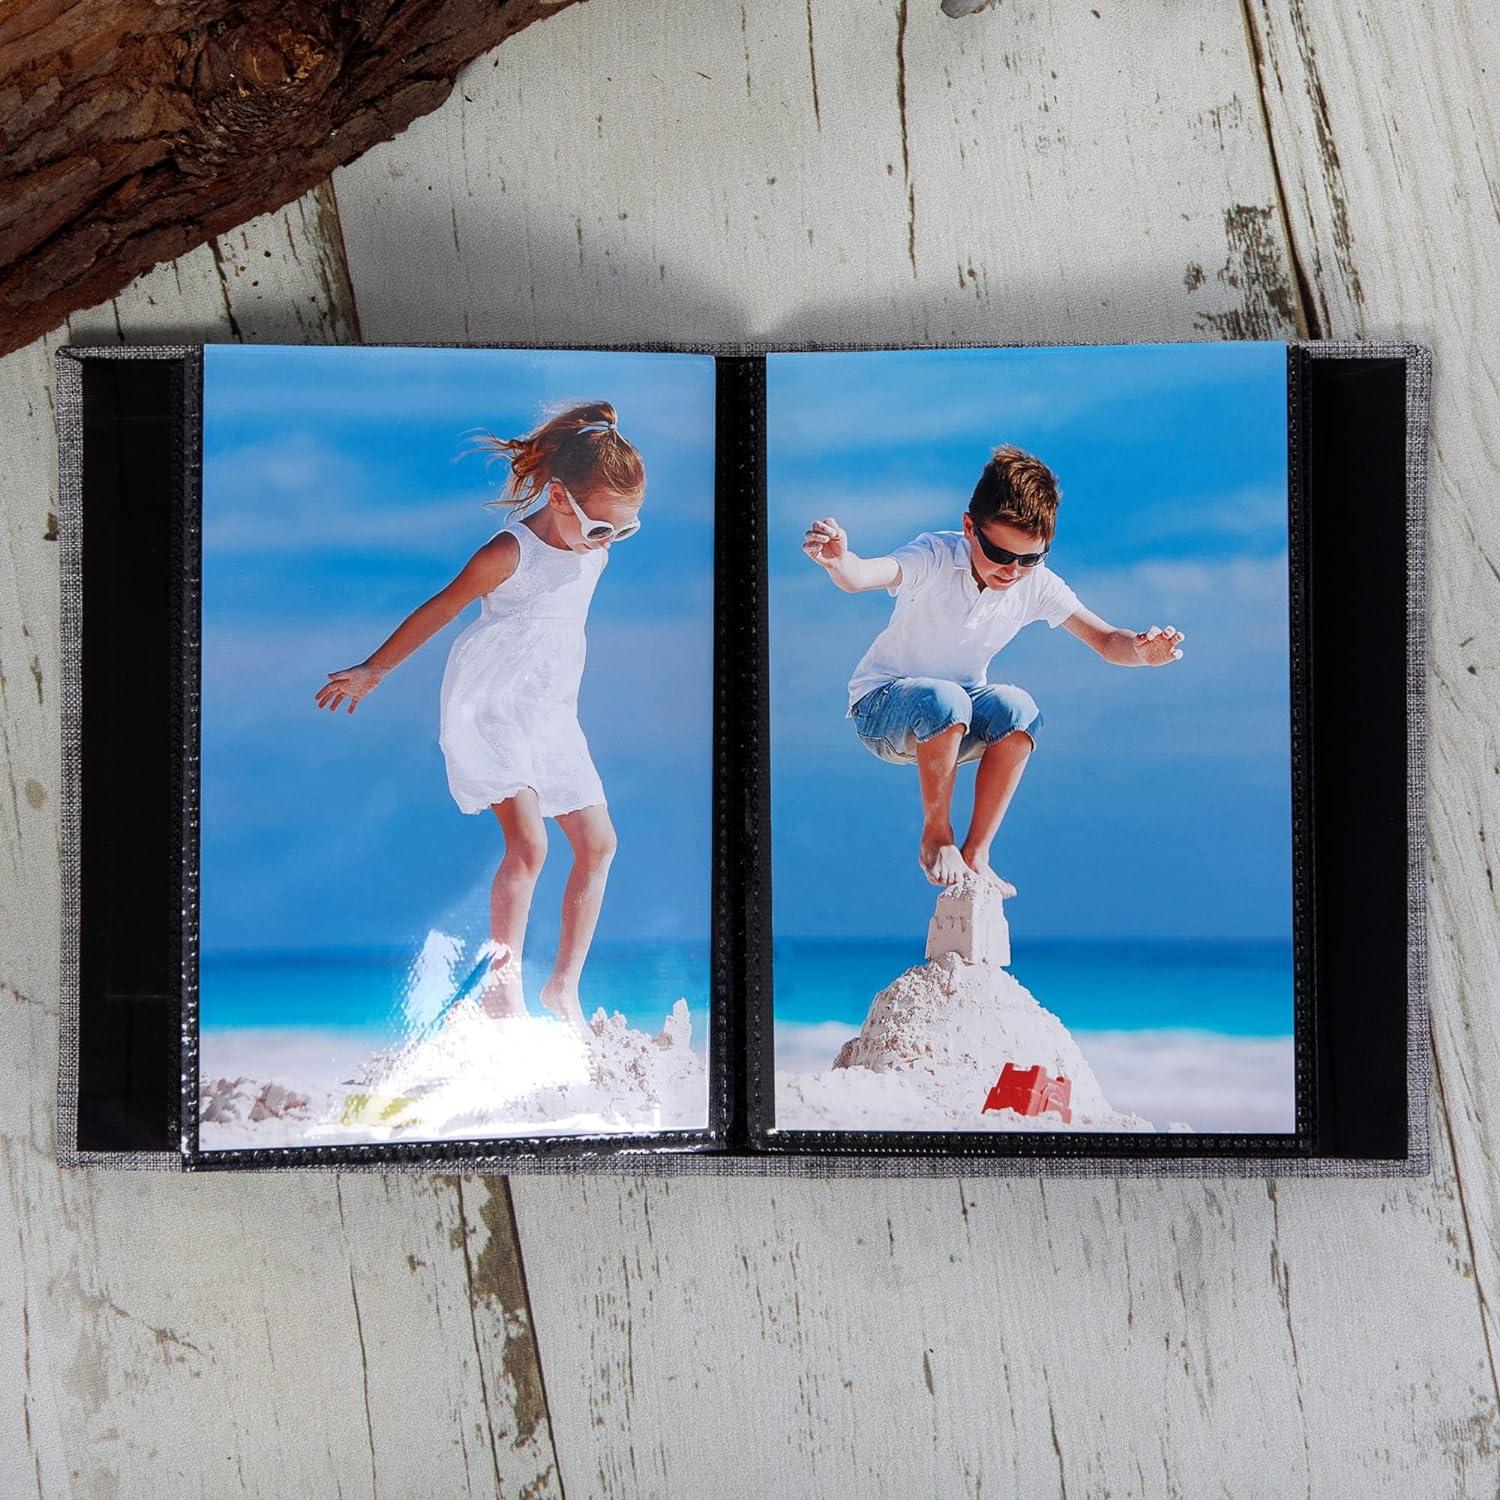 4x6 Photo Albums - Photo Album 4x6 - Small Photo Album 4x6 - Small